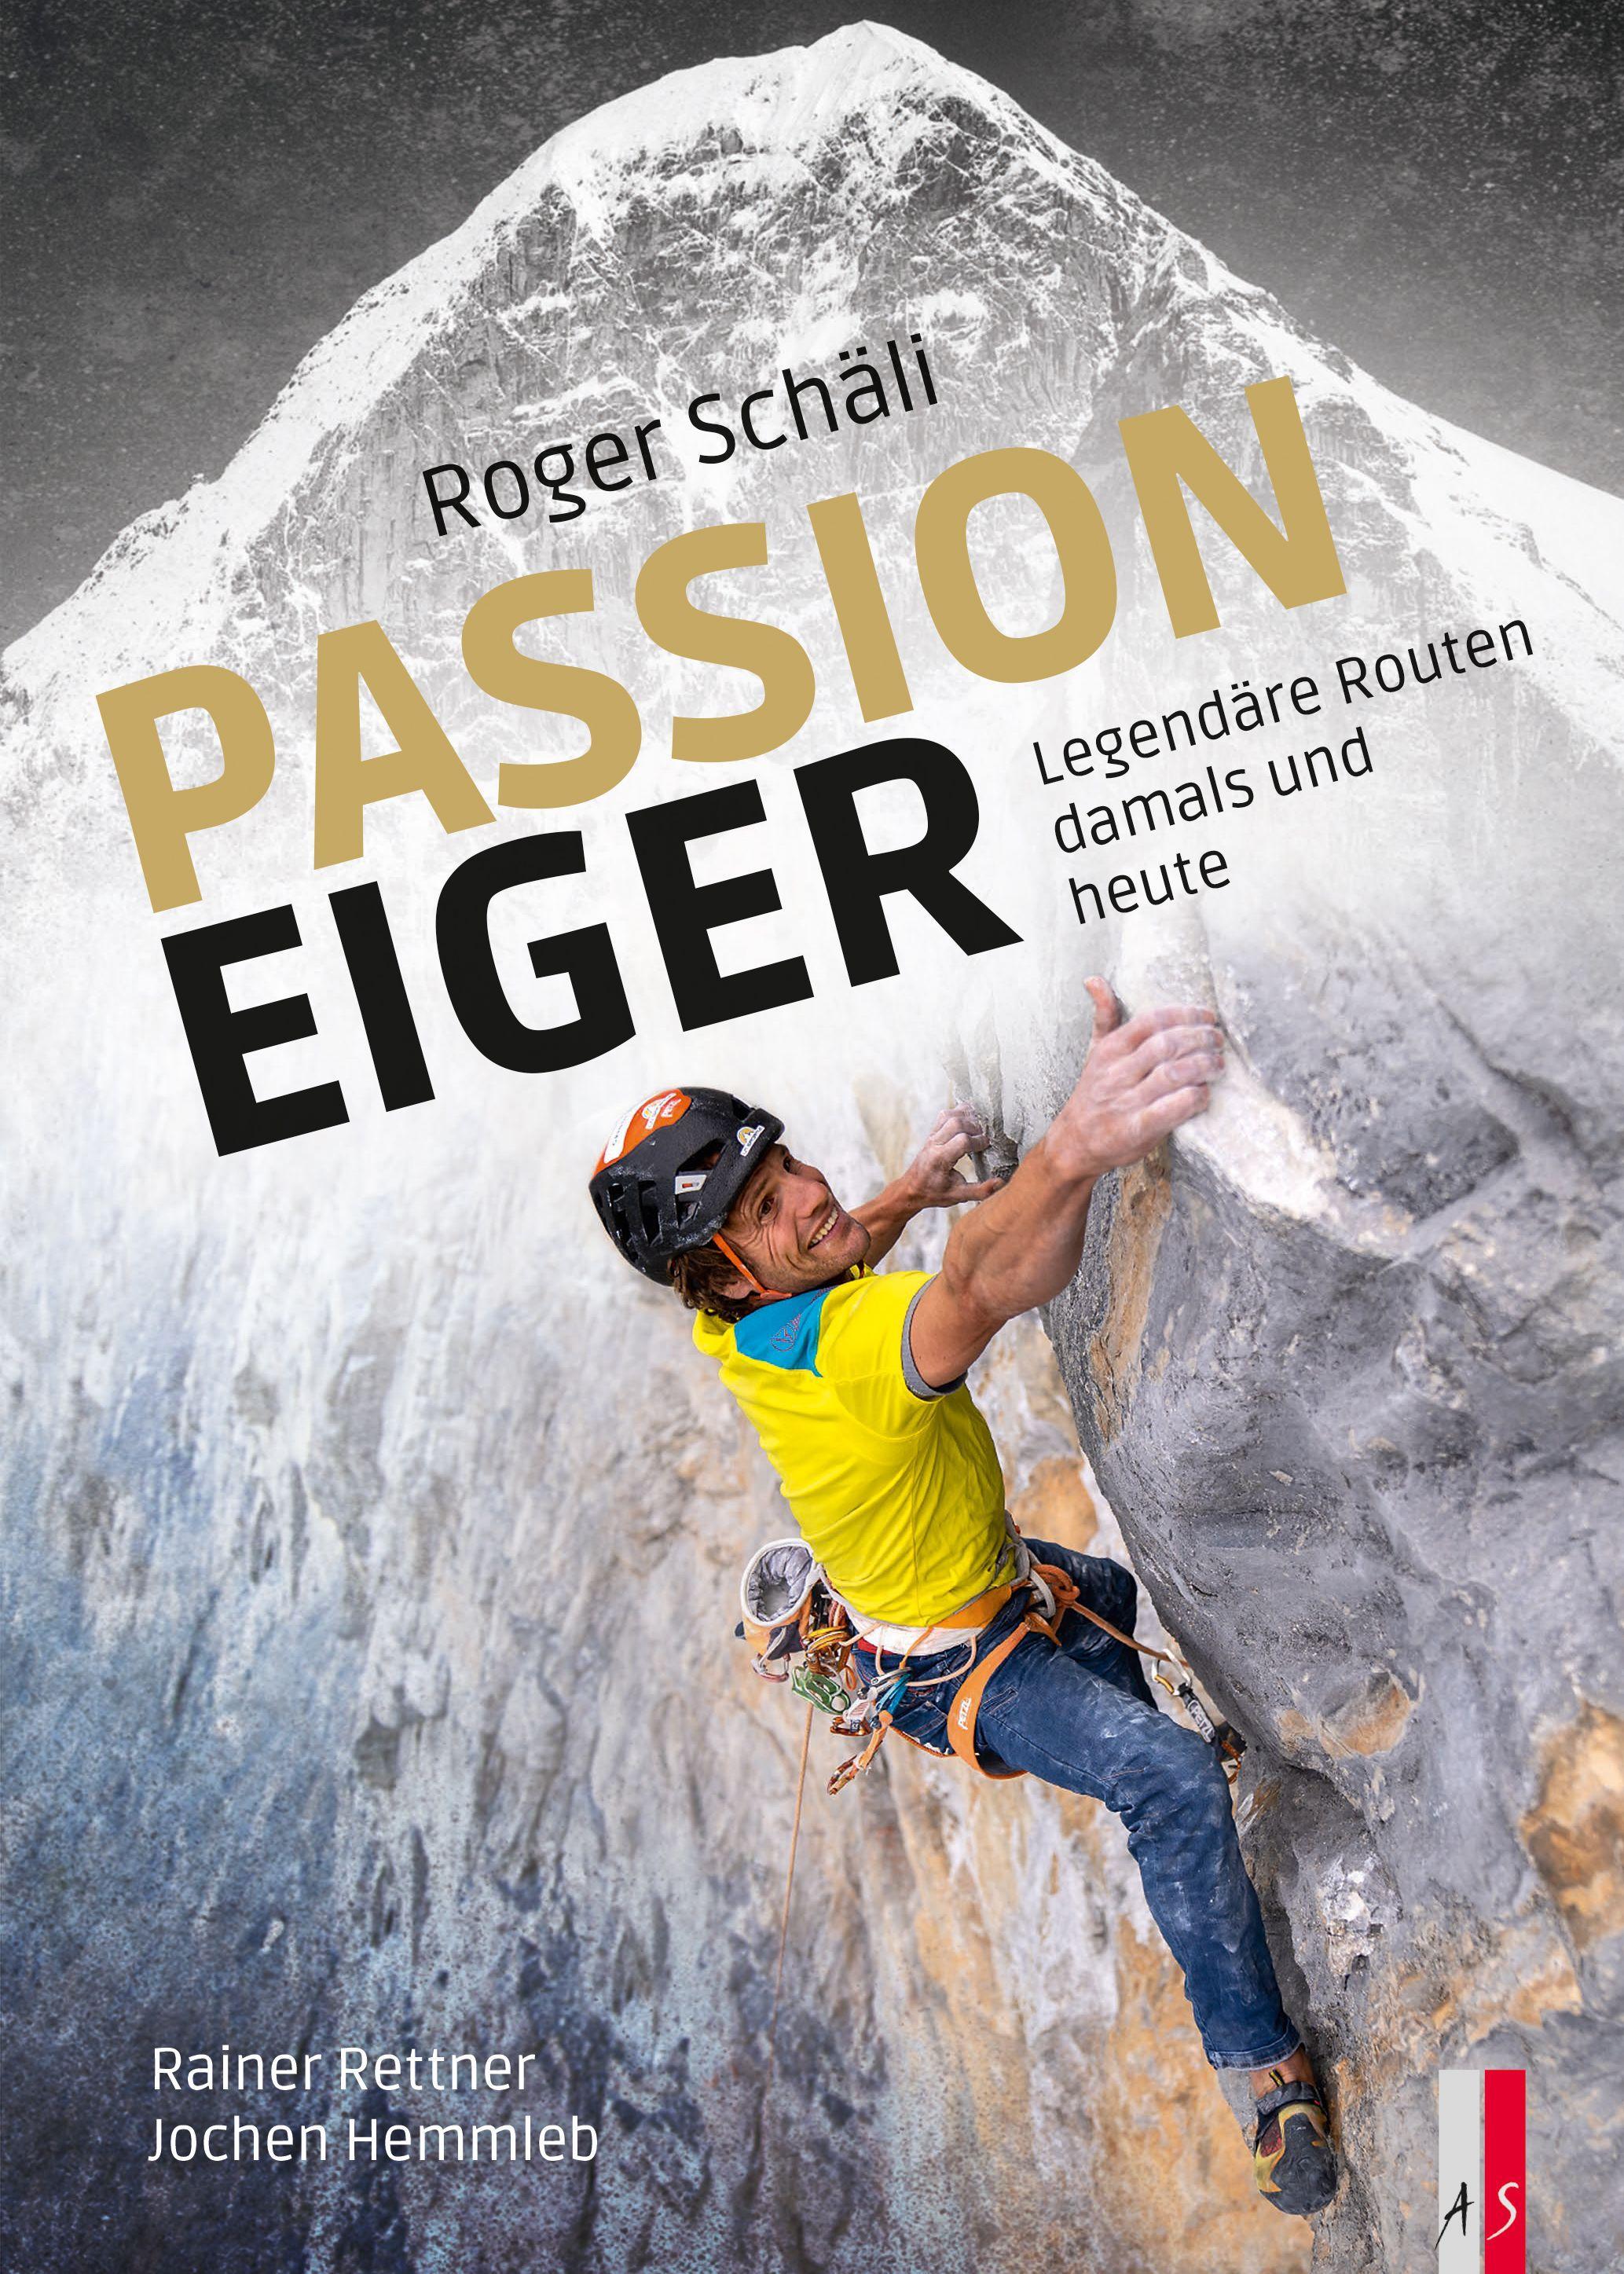 Passion Eiger | Roger Schäli 9783039130085 Roger Schäli AS Verlag, Zürich   Bergsportverhalen, Historische reisgidsen Berner Oberland